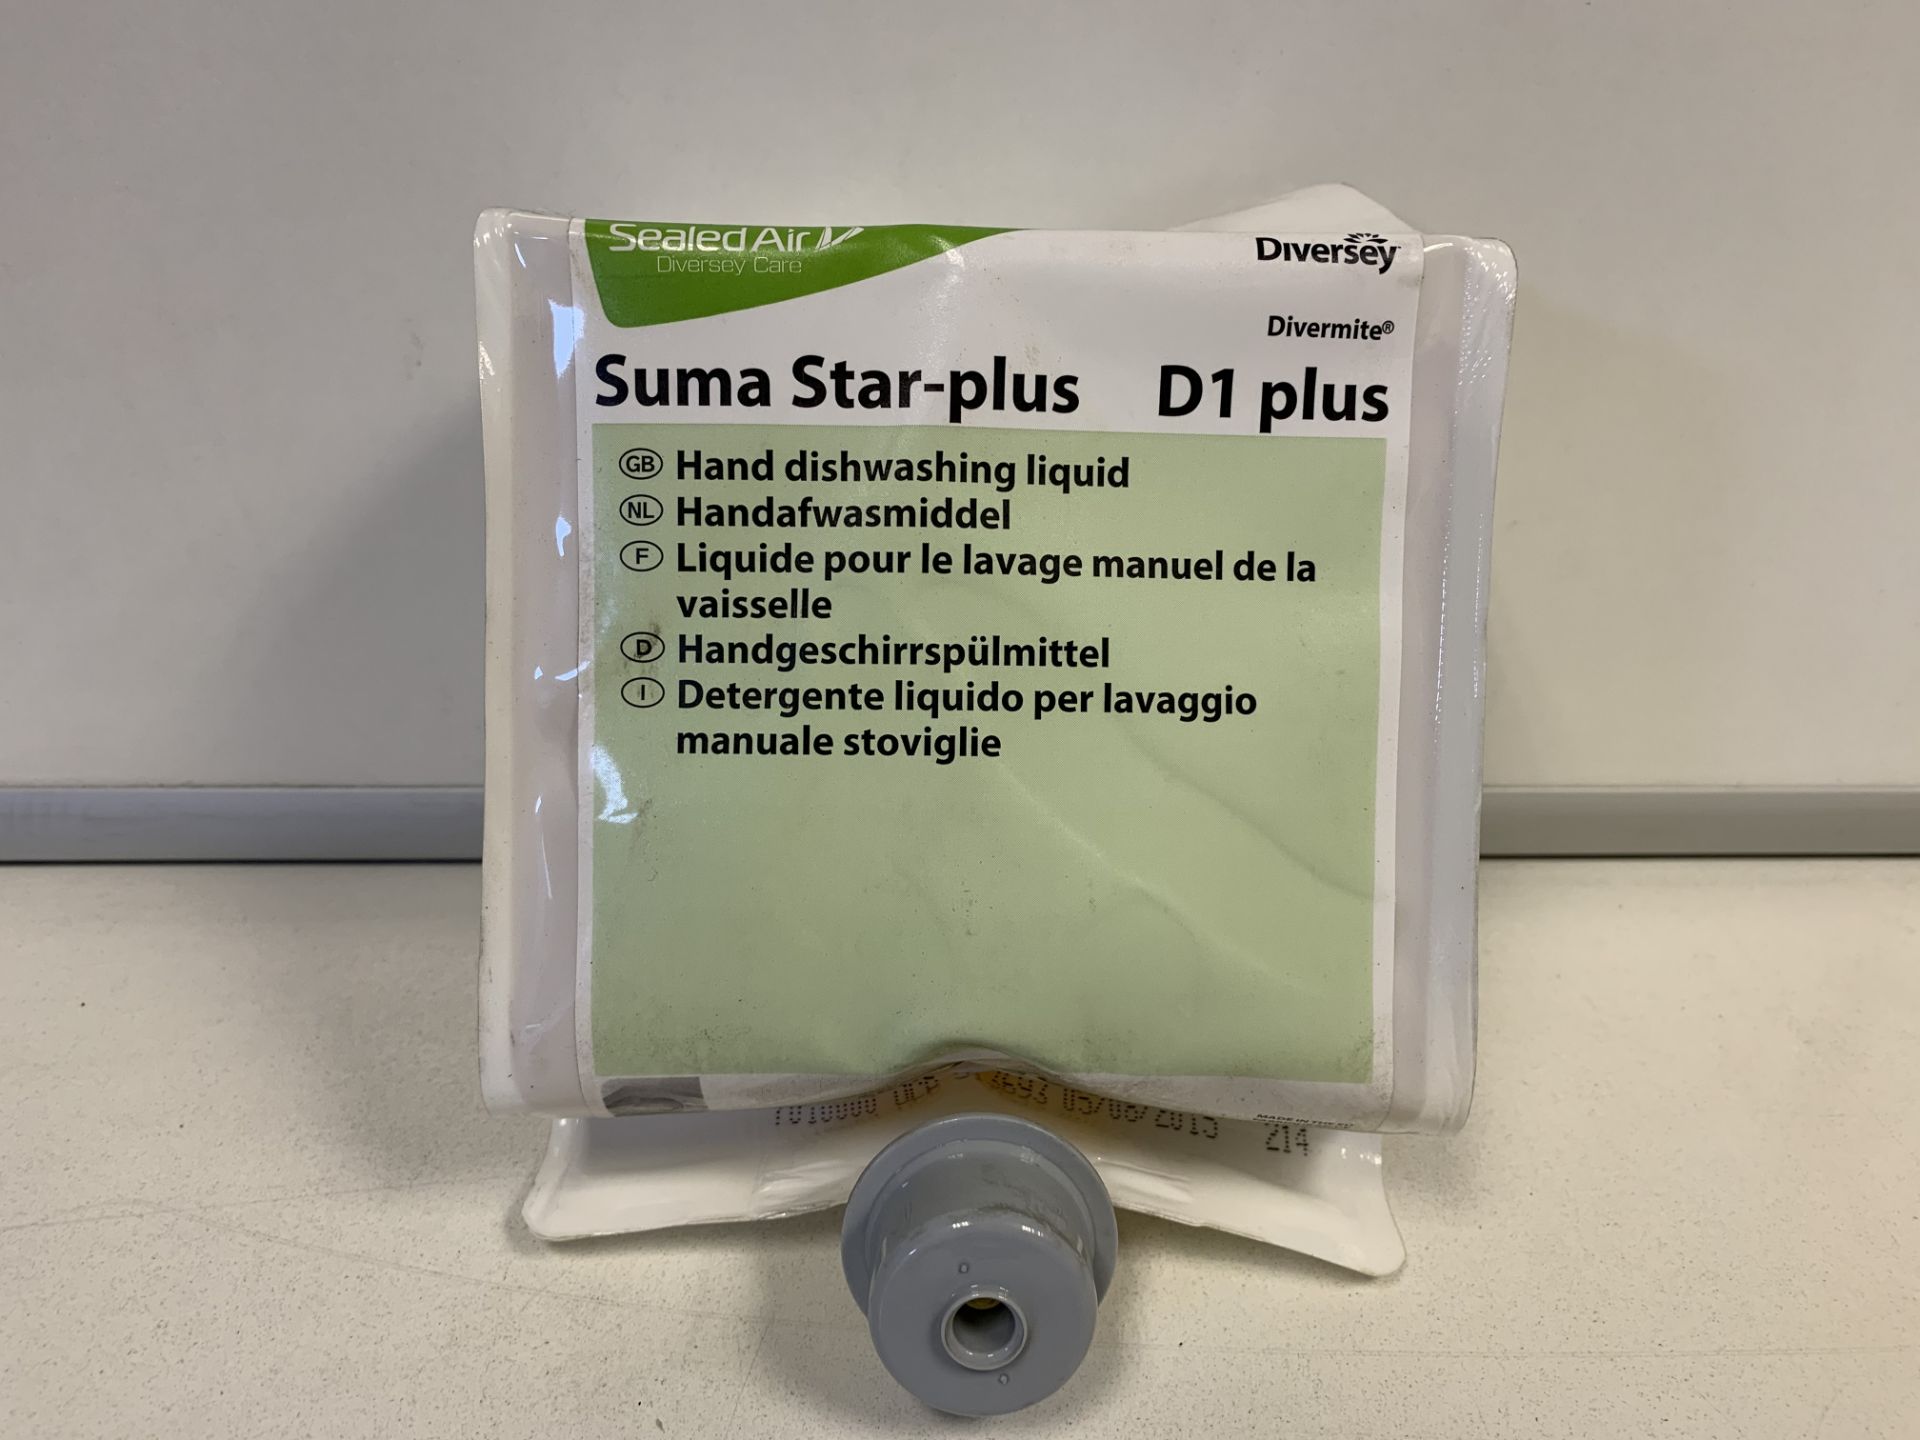 8 X BRAND NEW SUMA STAR PLUS D1 PLUS 1.5L HAND DISHWASHING LIQUID IN 2 BOXES RRP £300